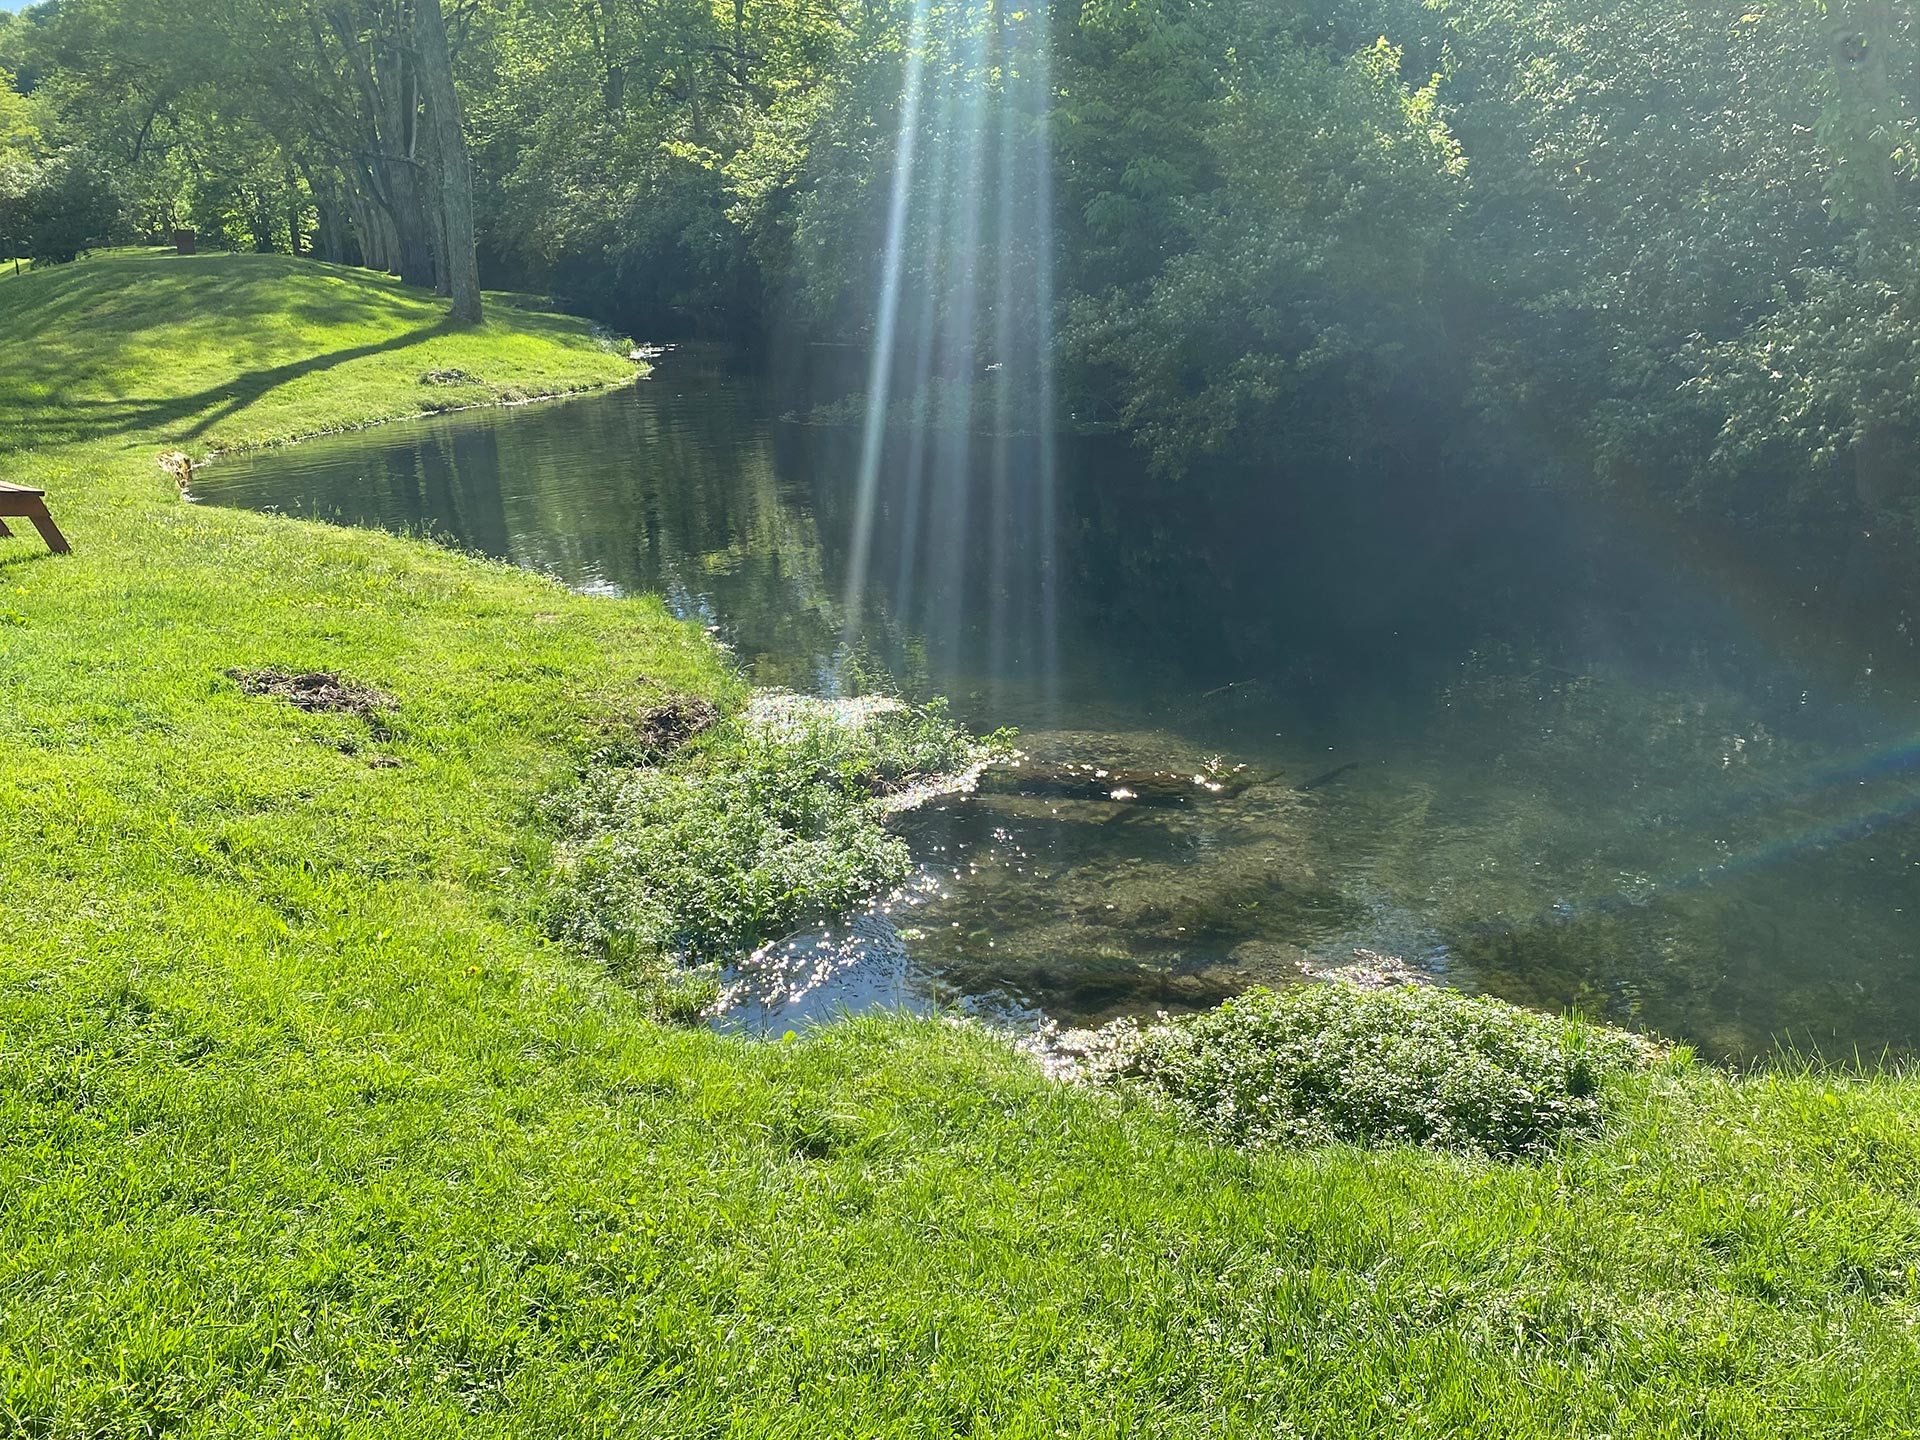 Sunshine spotlighting a cove in the stream